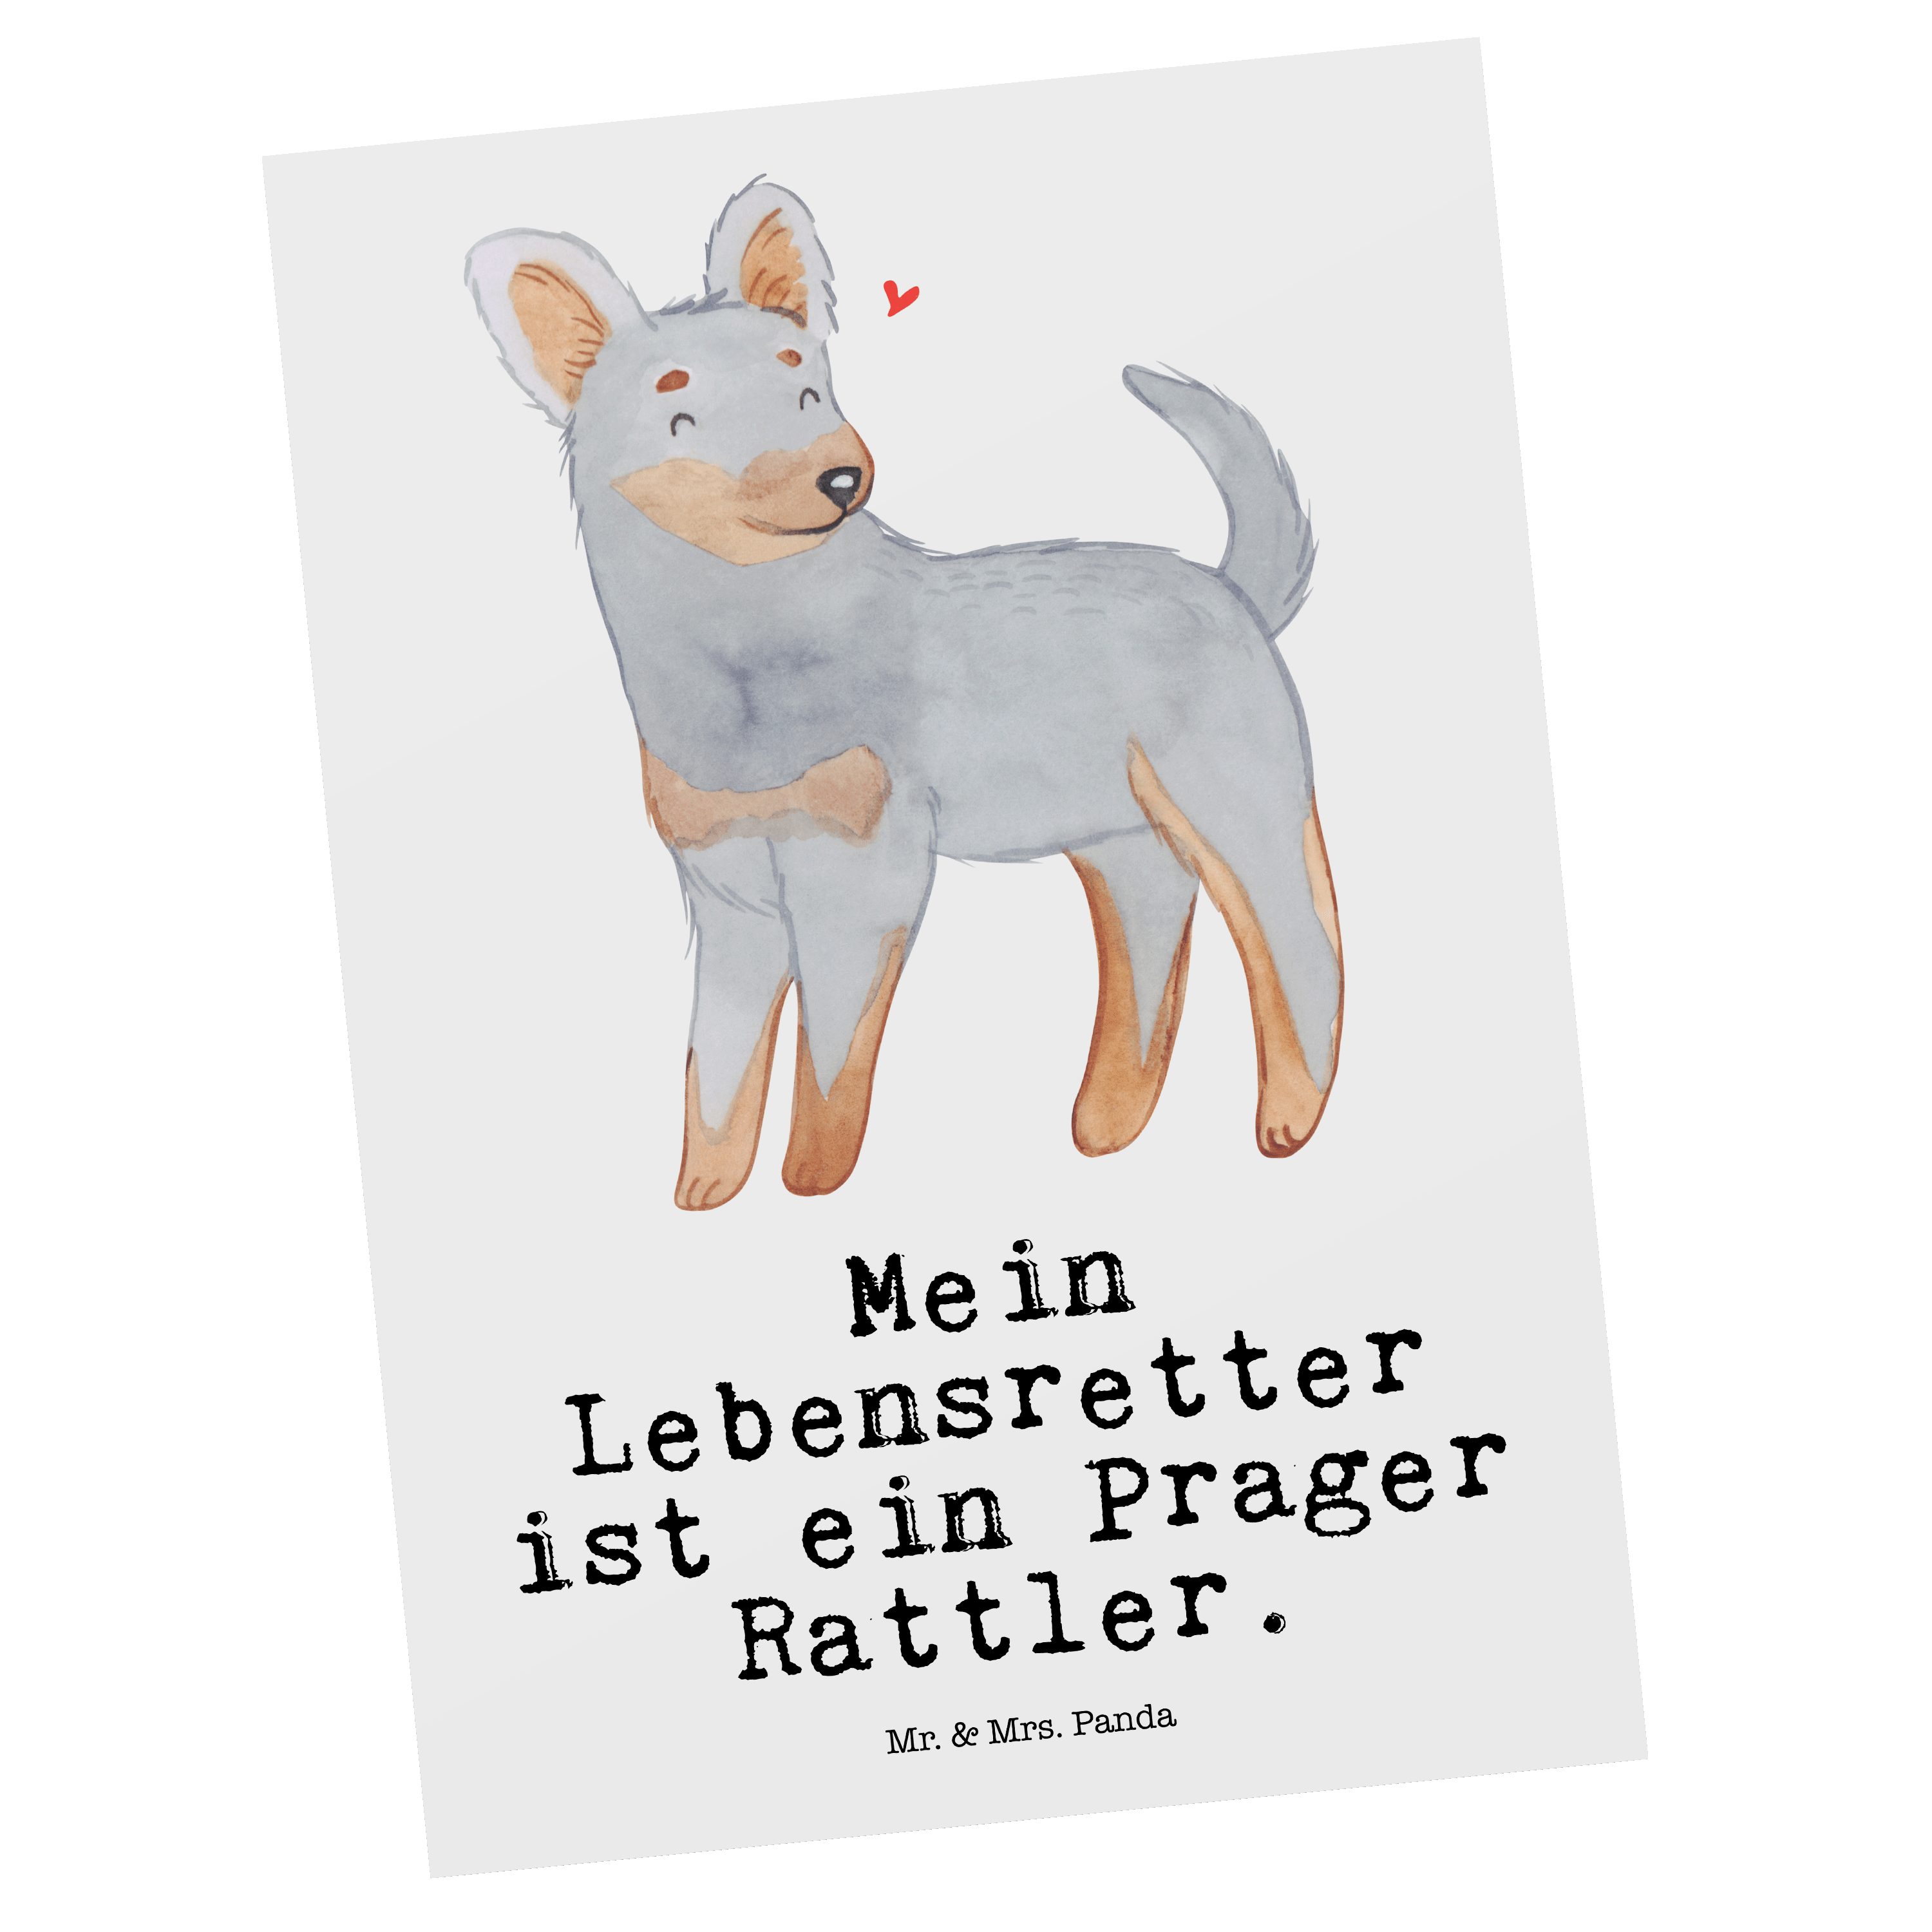 Mr. & Mrs. Panda Postkarte Prager Rattler Lebensretter - Weiß - Geschenk, Grußkarte, Geburtstags